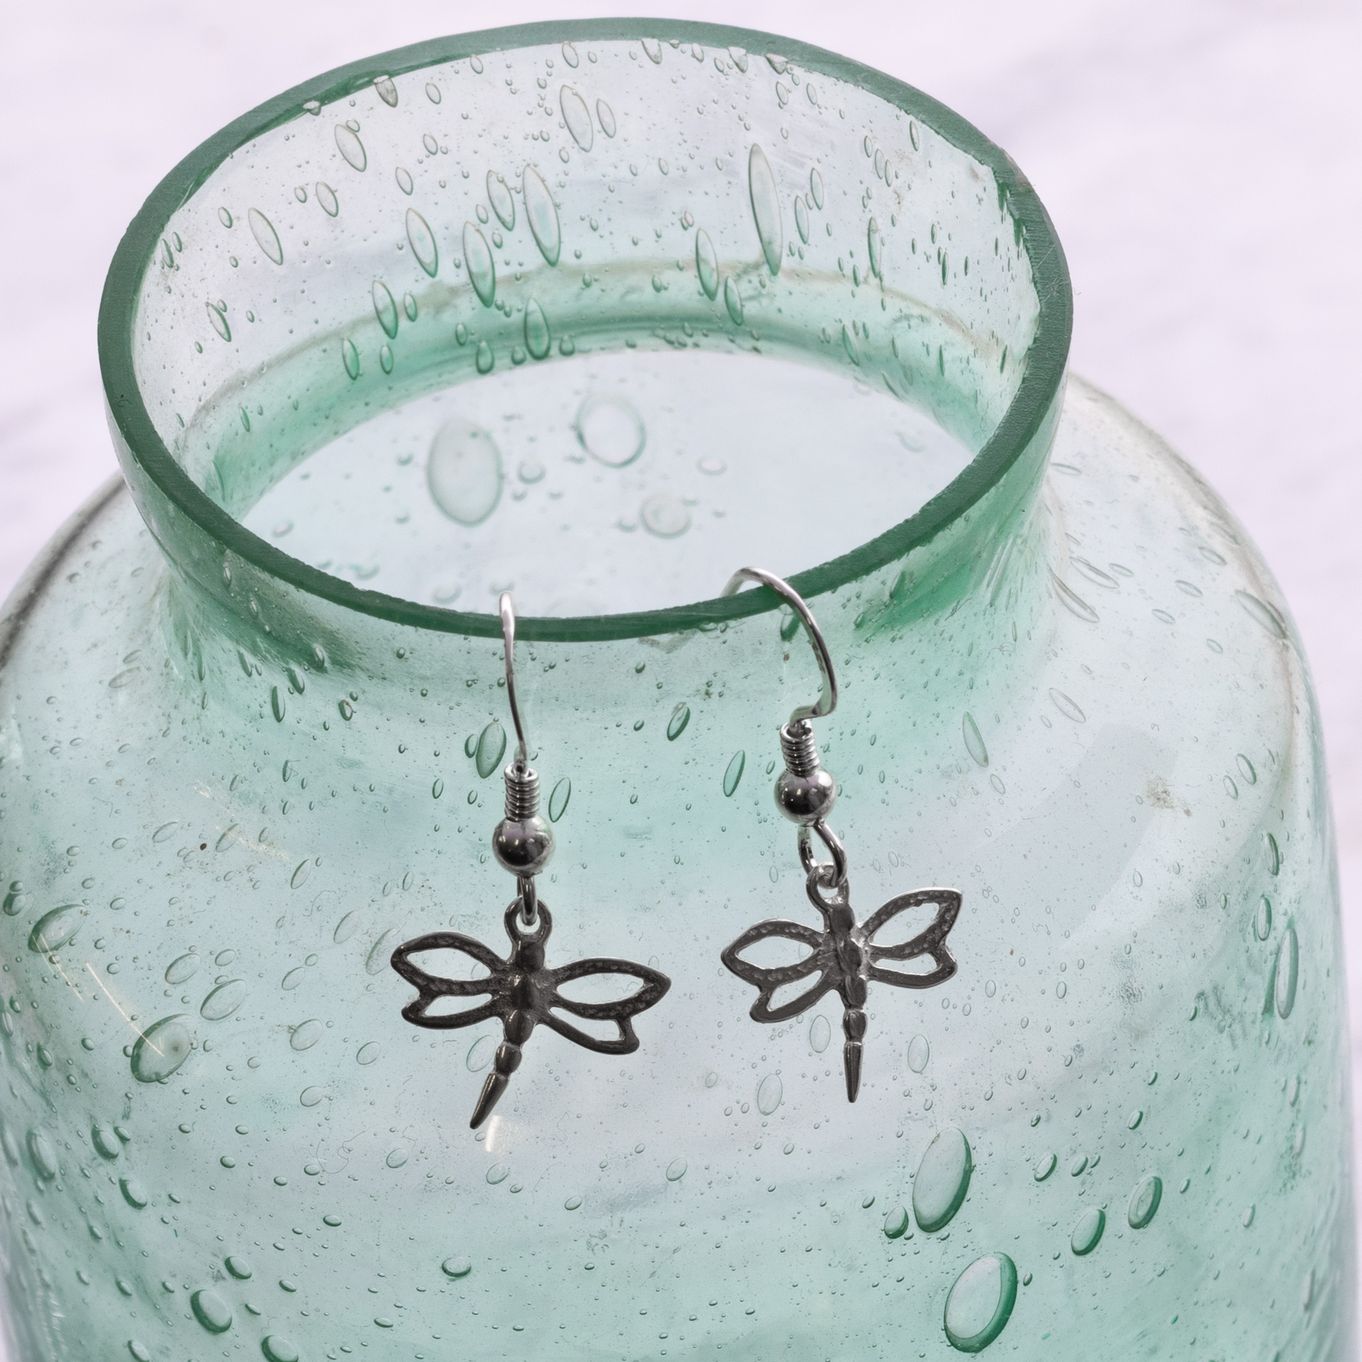 Dragonfly Charm Earrings